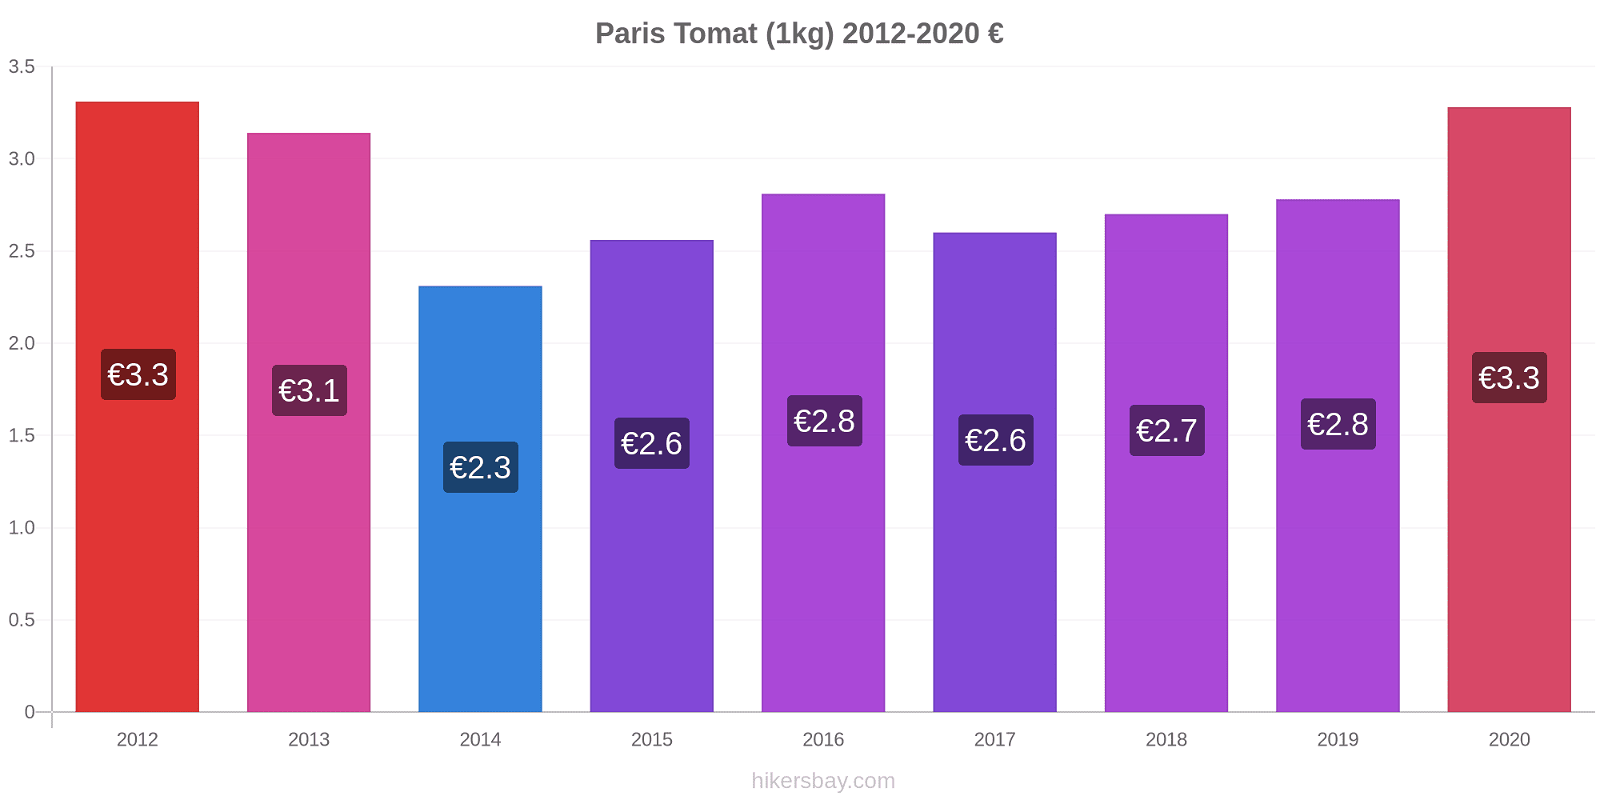 Paris prisendringer Tomat (1kg) hikersbay.com